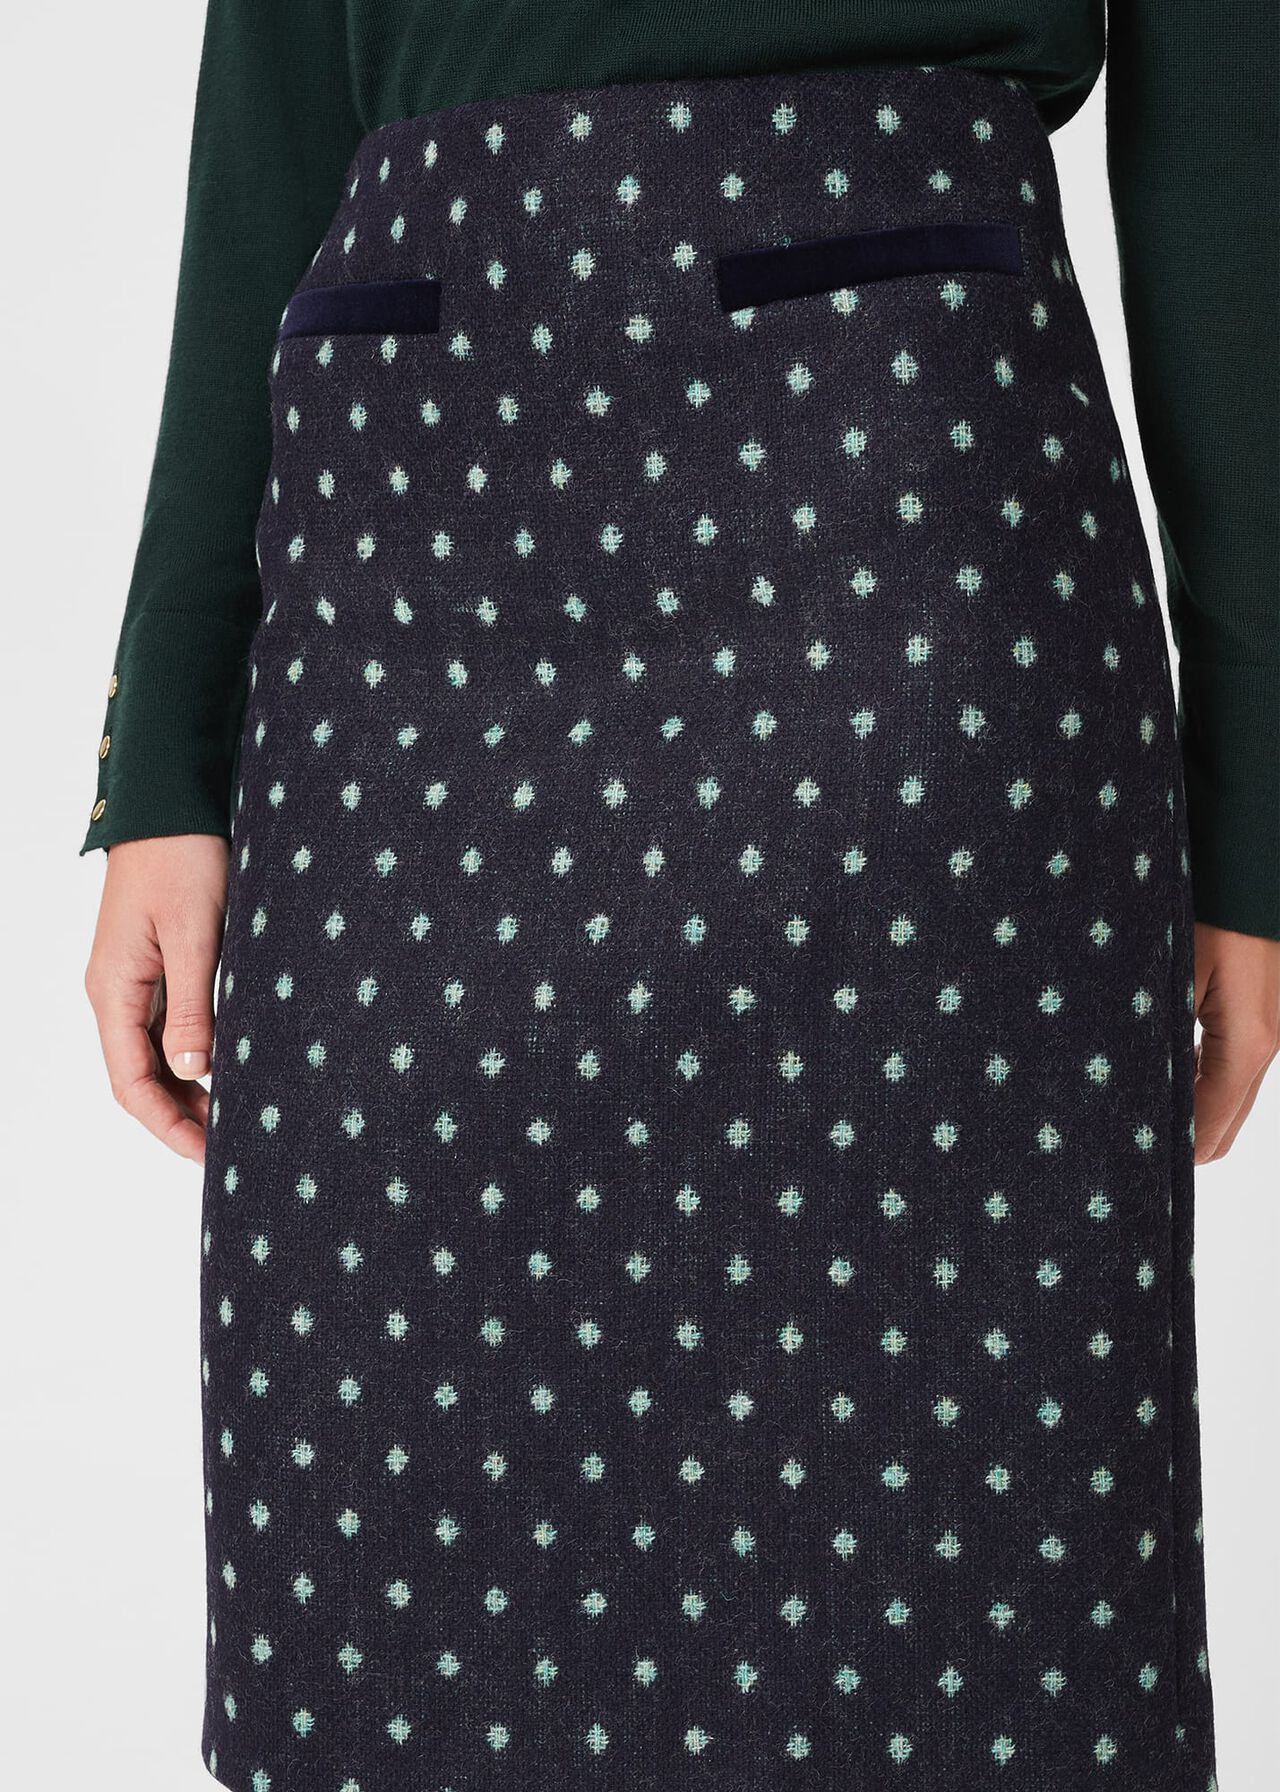 Tessa Wool Pencil Skirt, Navy Green, hi-res